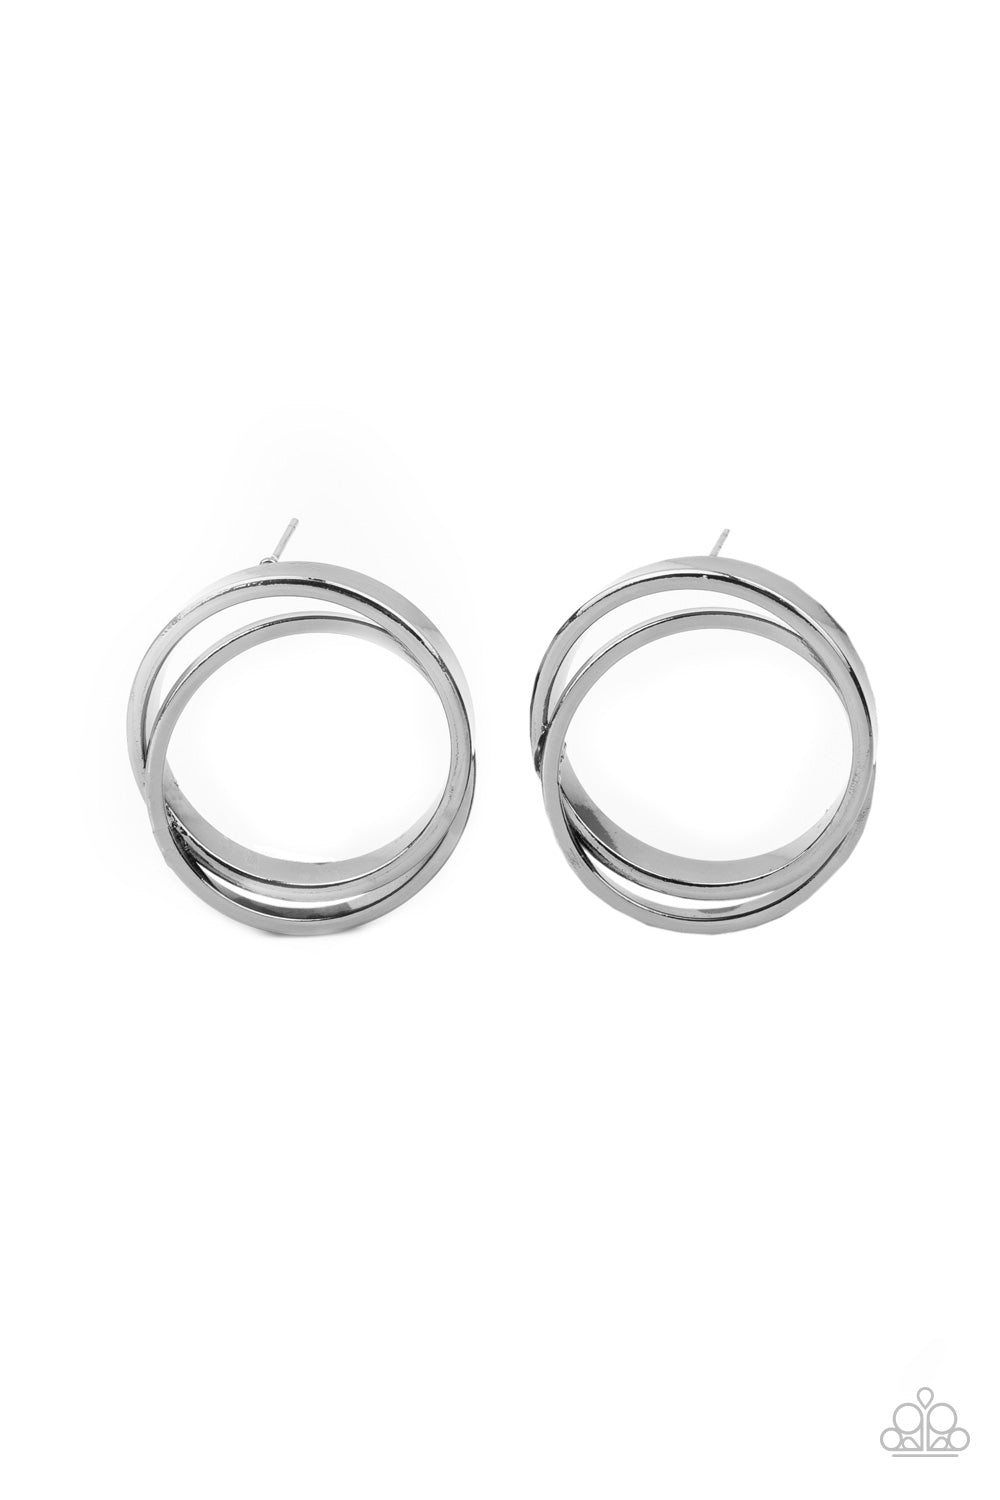 Always In The Loop Gunmetal Black Earrings - Paparazzi Accessories- lightbox - CarasShop.com - $5 Jewelry by Cara Jewels